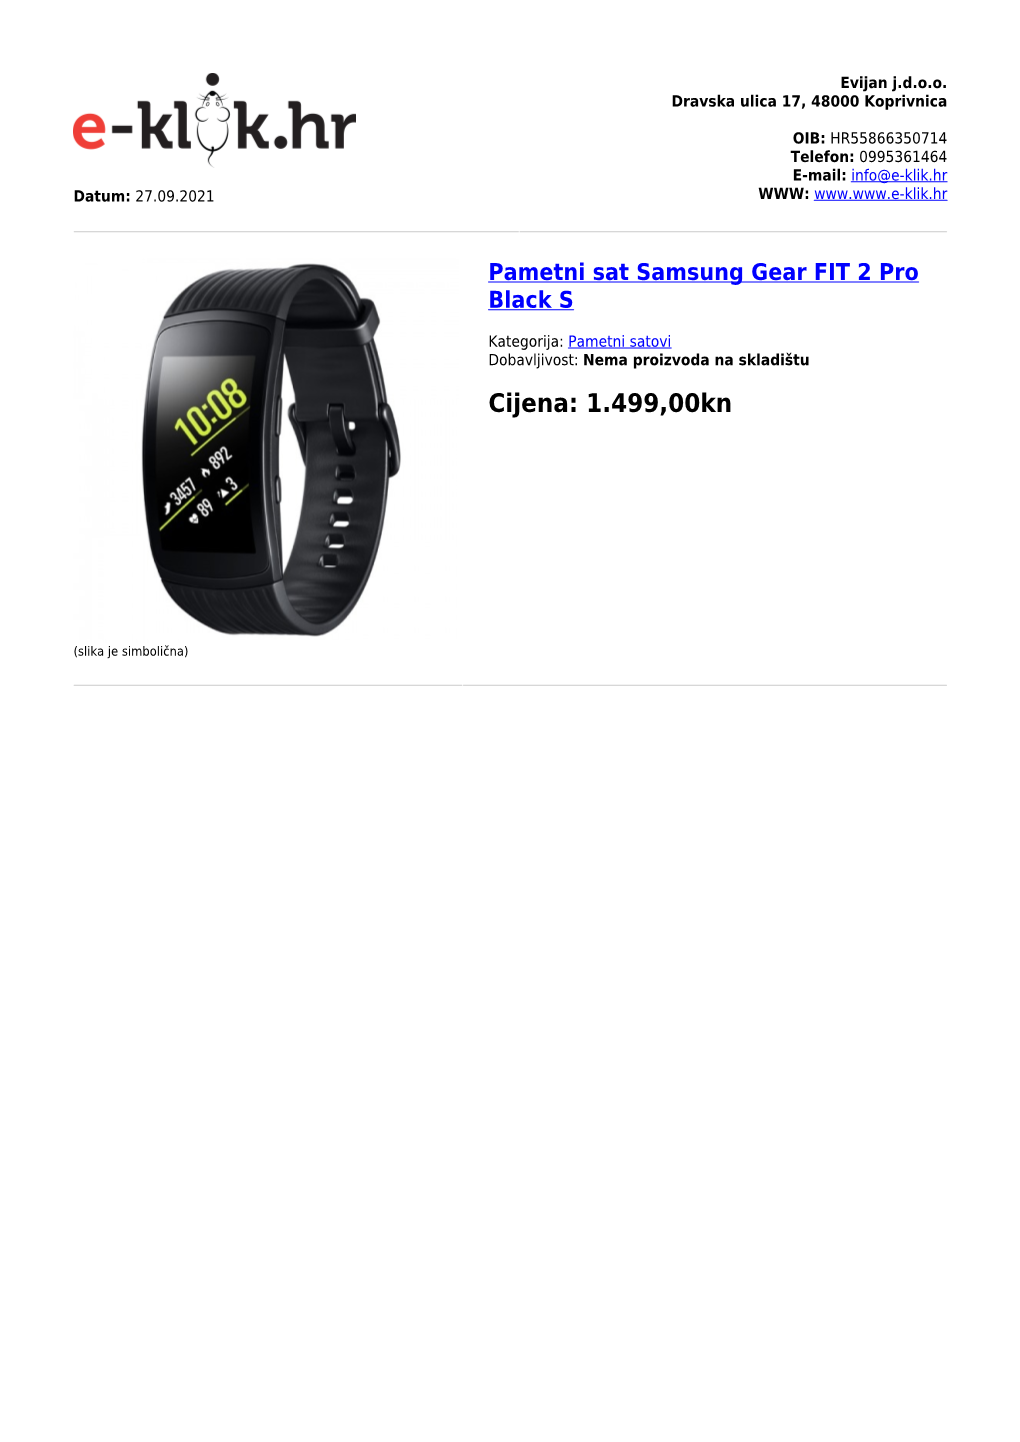 Pametni Sat Samsung Gear FIT 2 Pro Black S